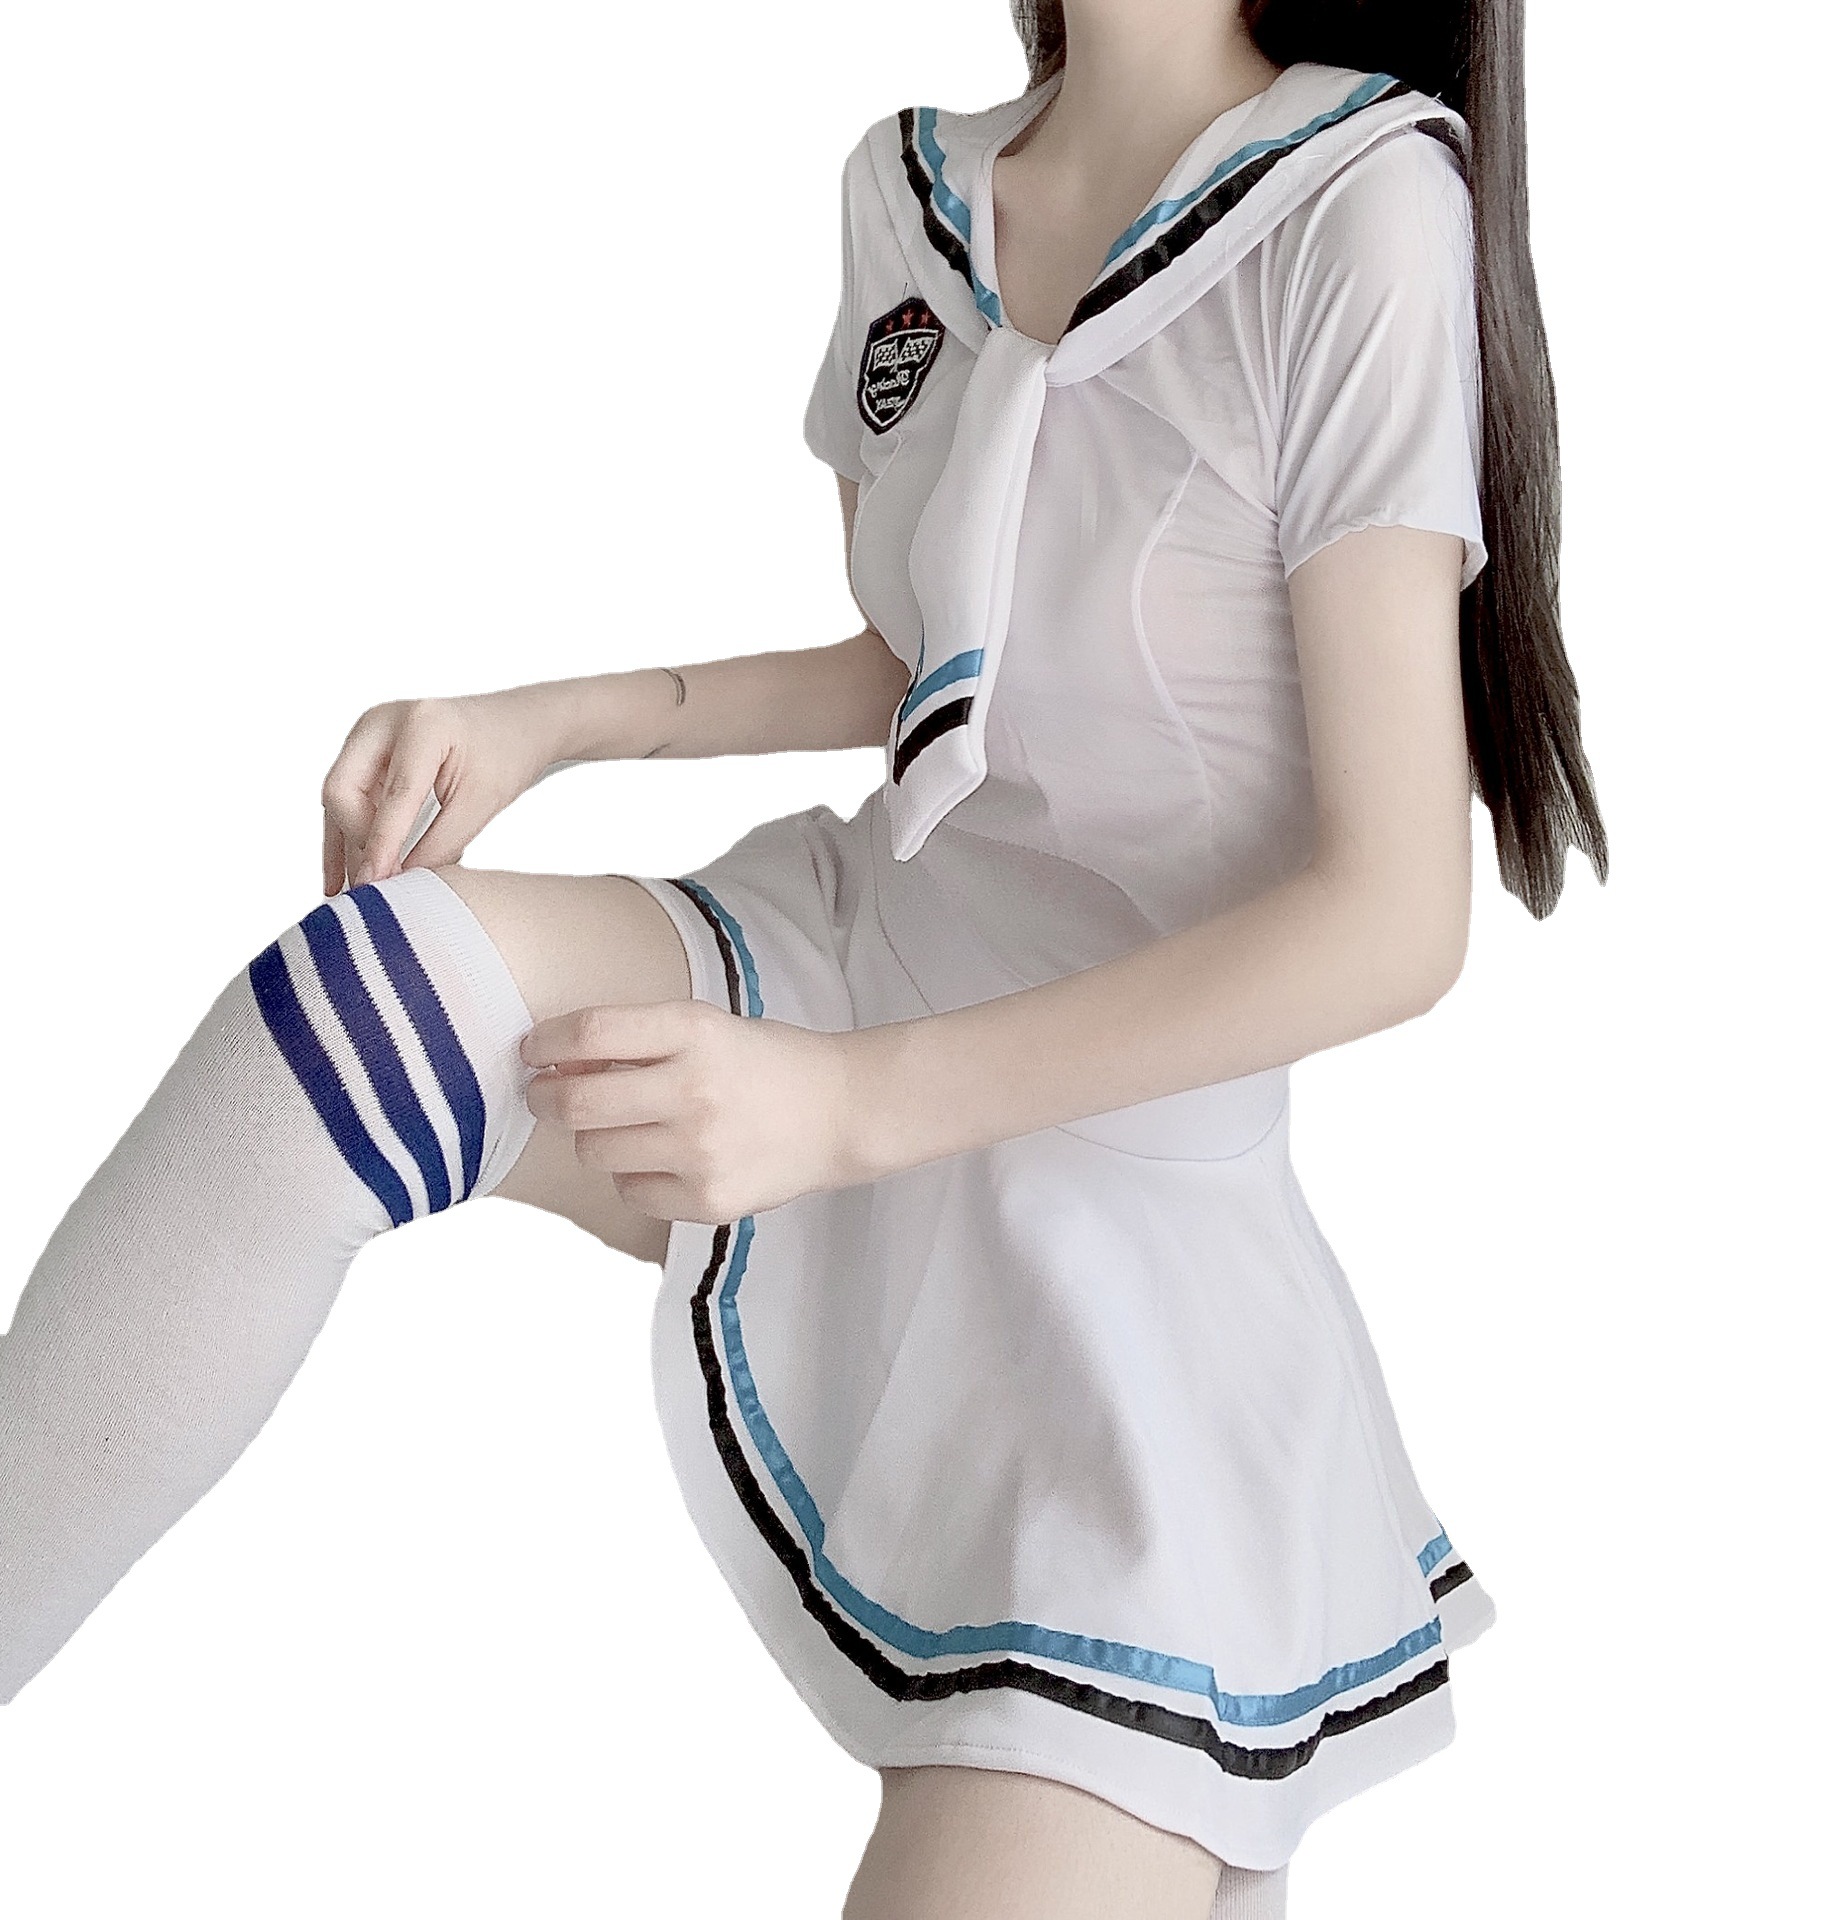 Large size can wear sexy and pure students JK sailor uniform temptation hot underwear wholesale